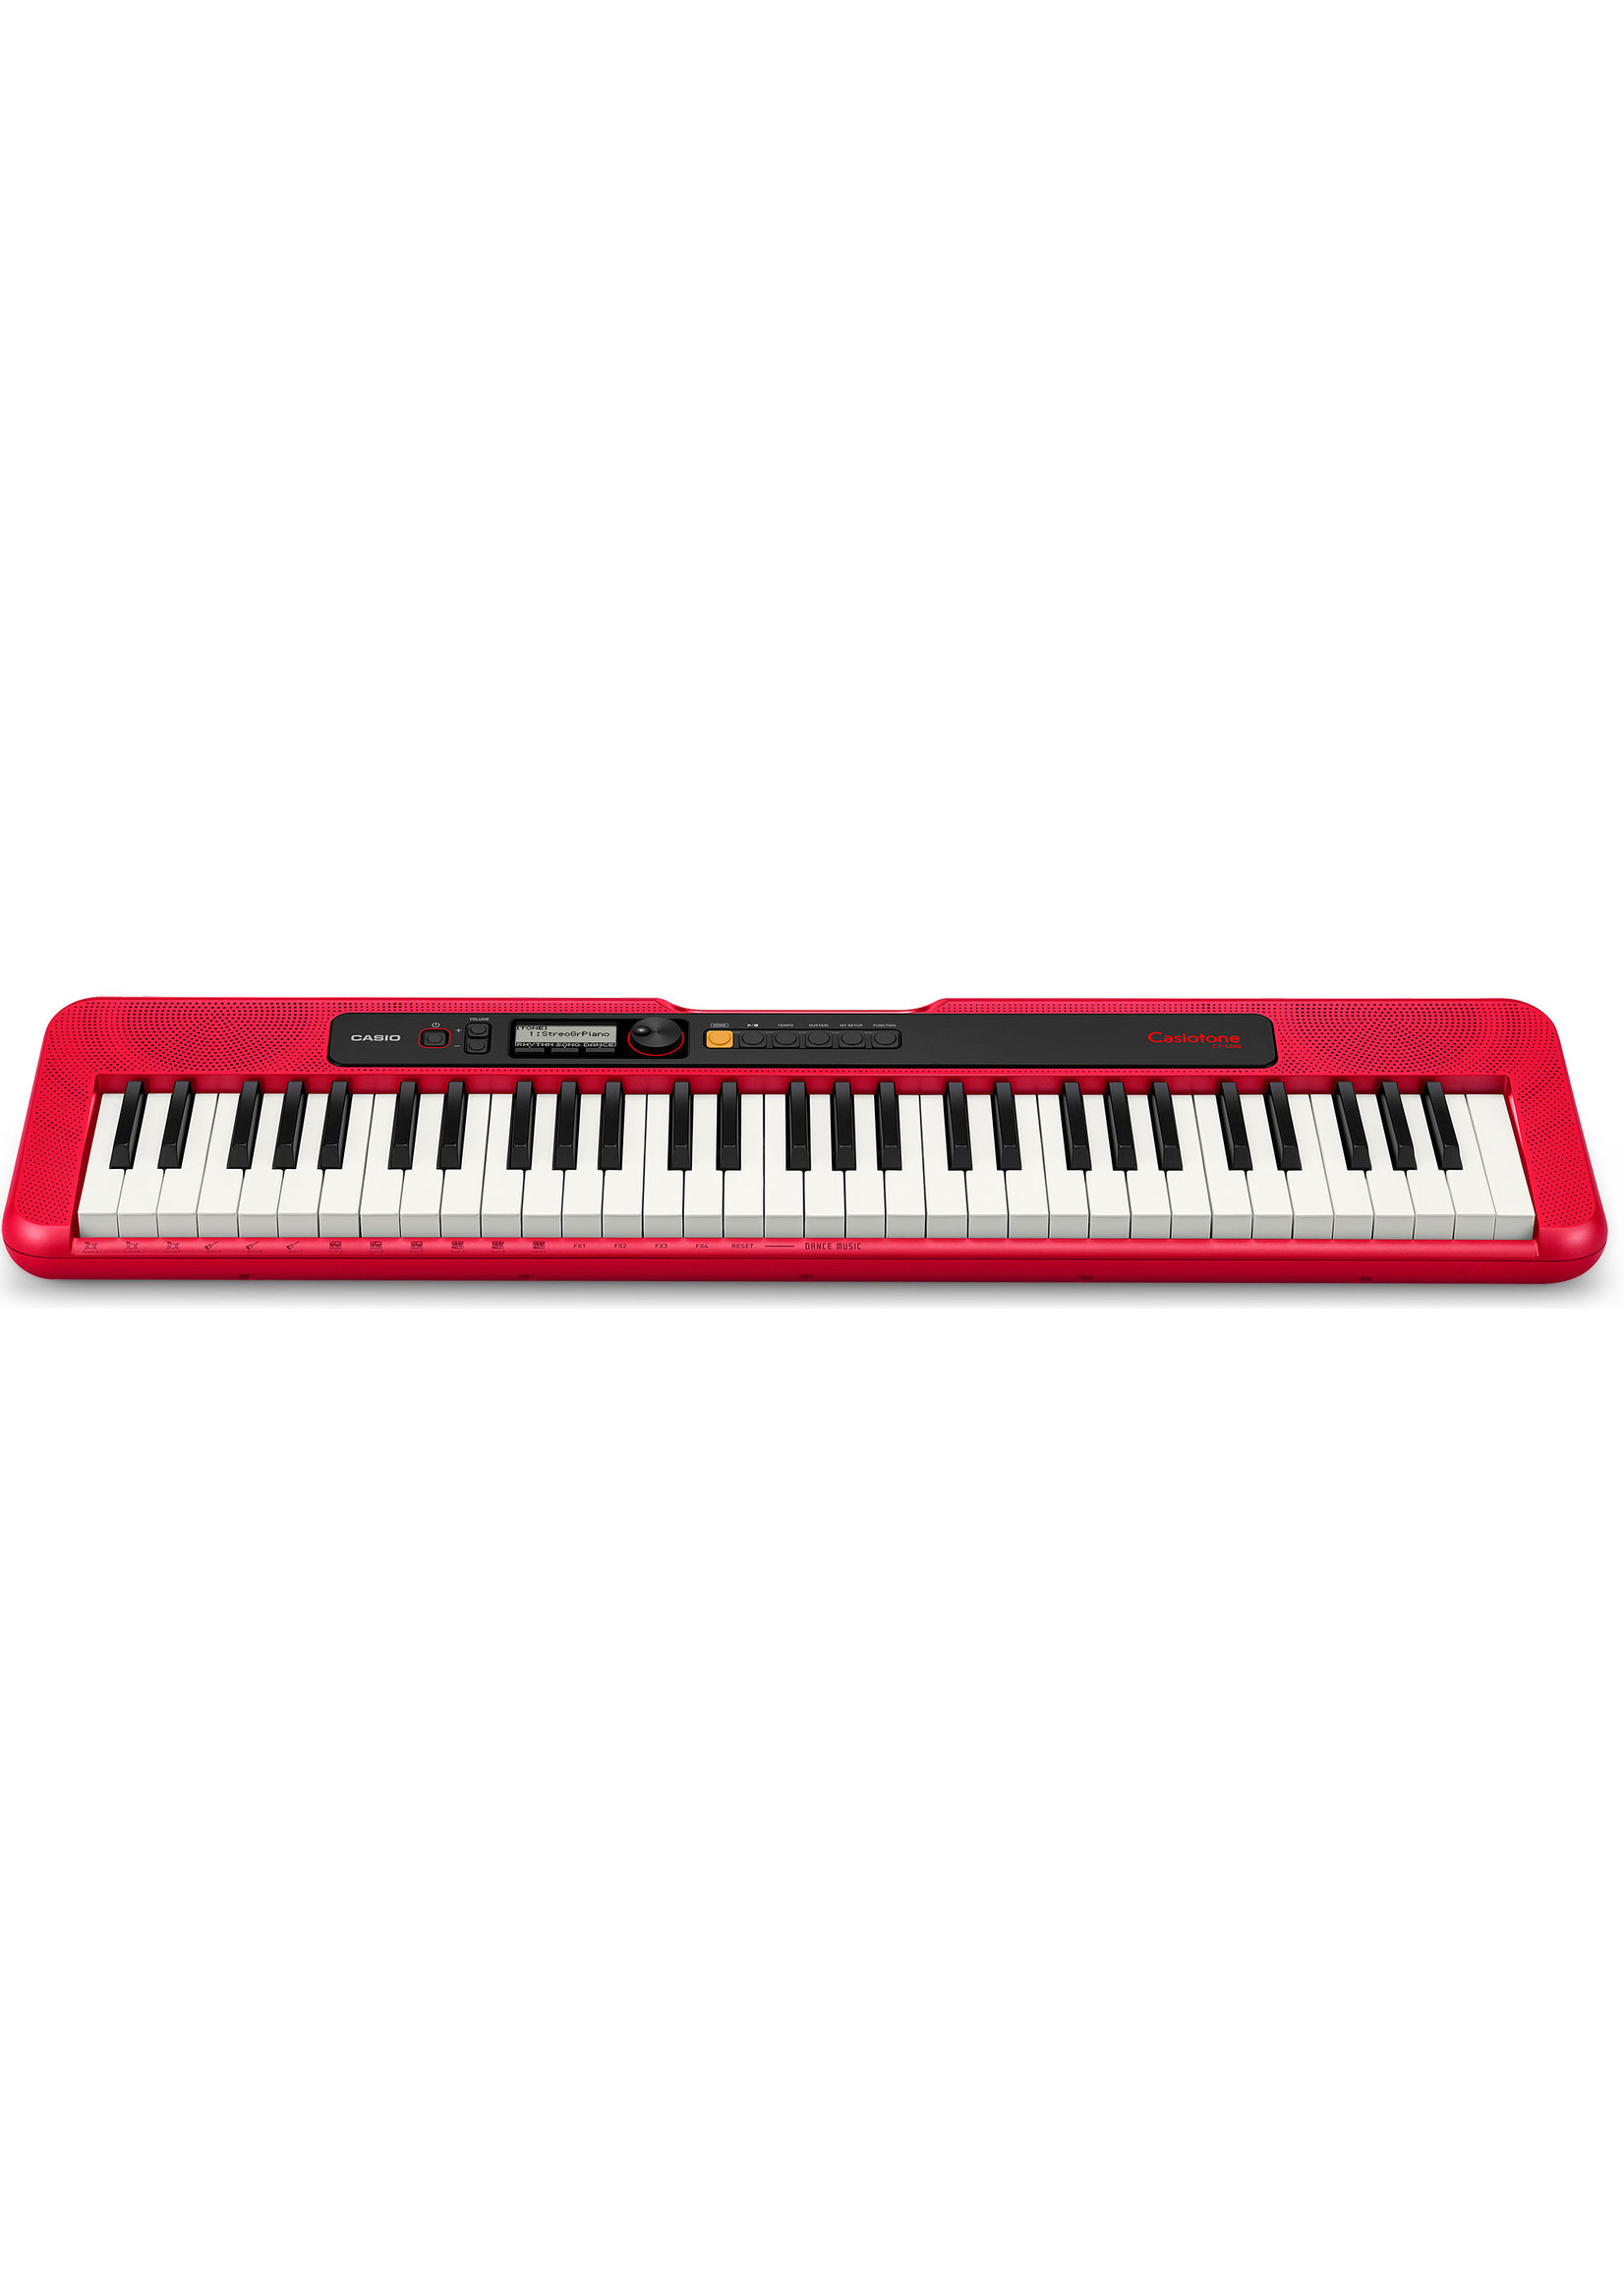 Casio Casio Casiotone CT-S200WE 61 Key Portable Arranger Keyboard RED